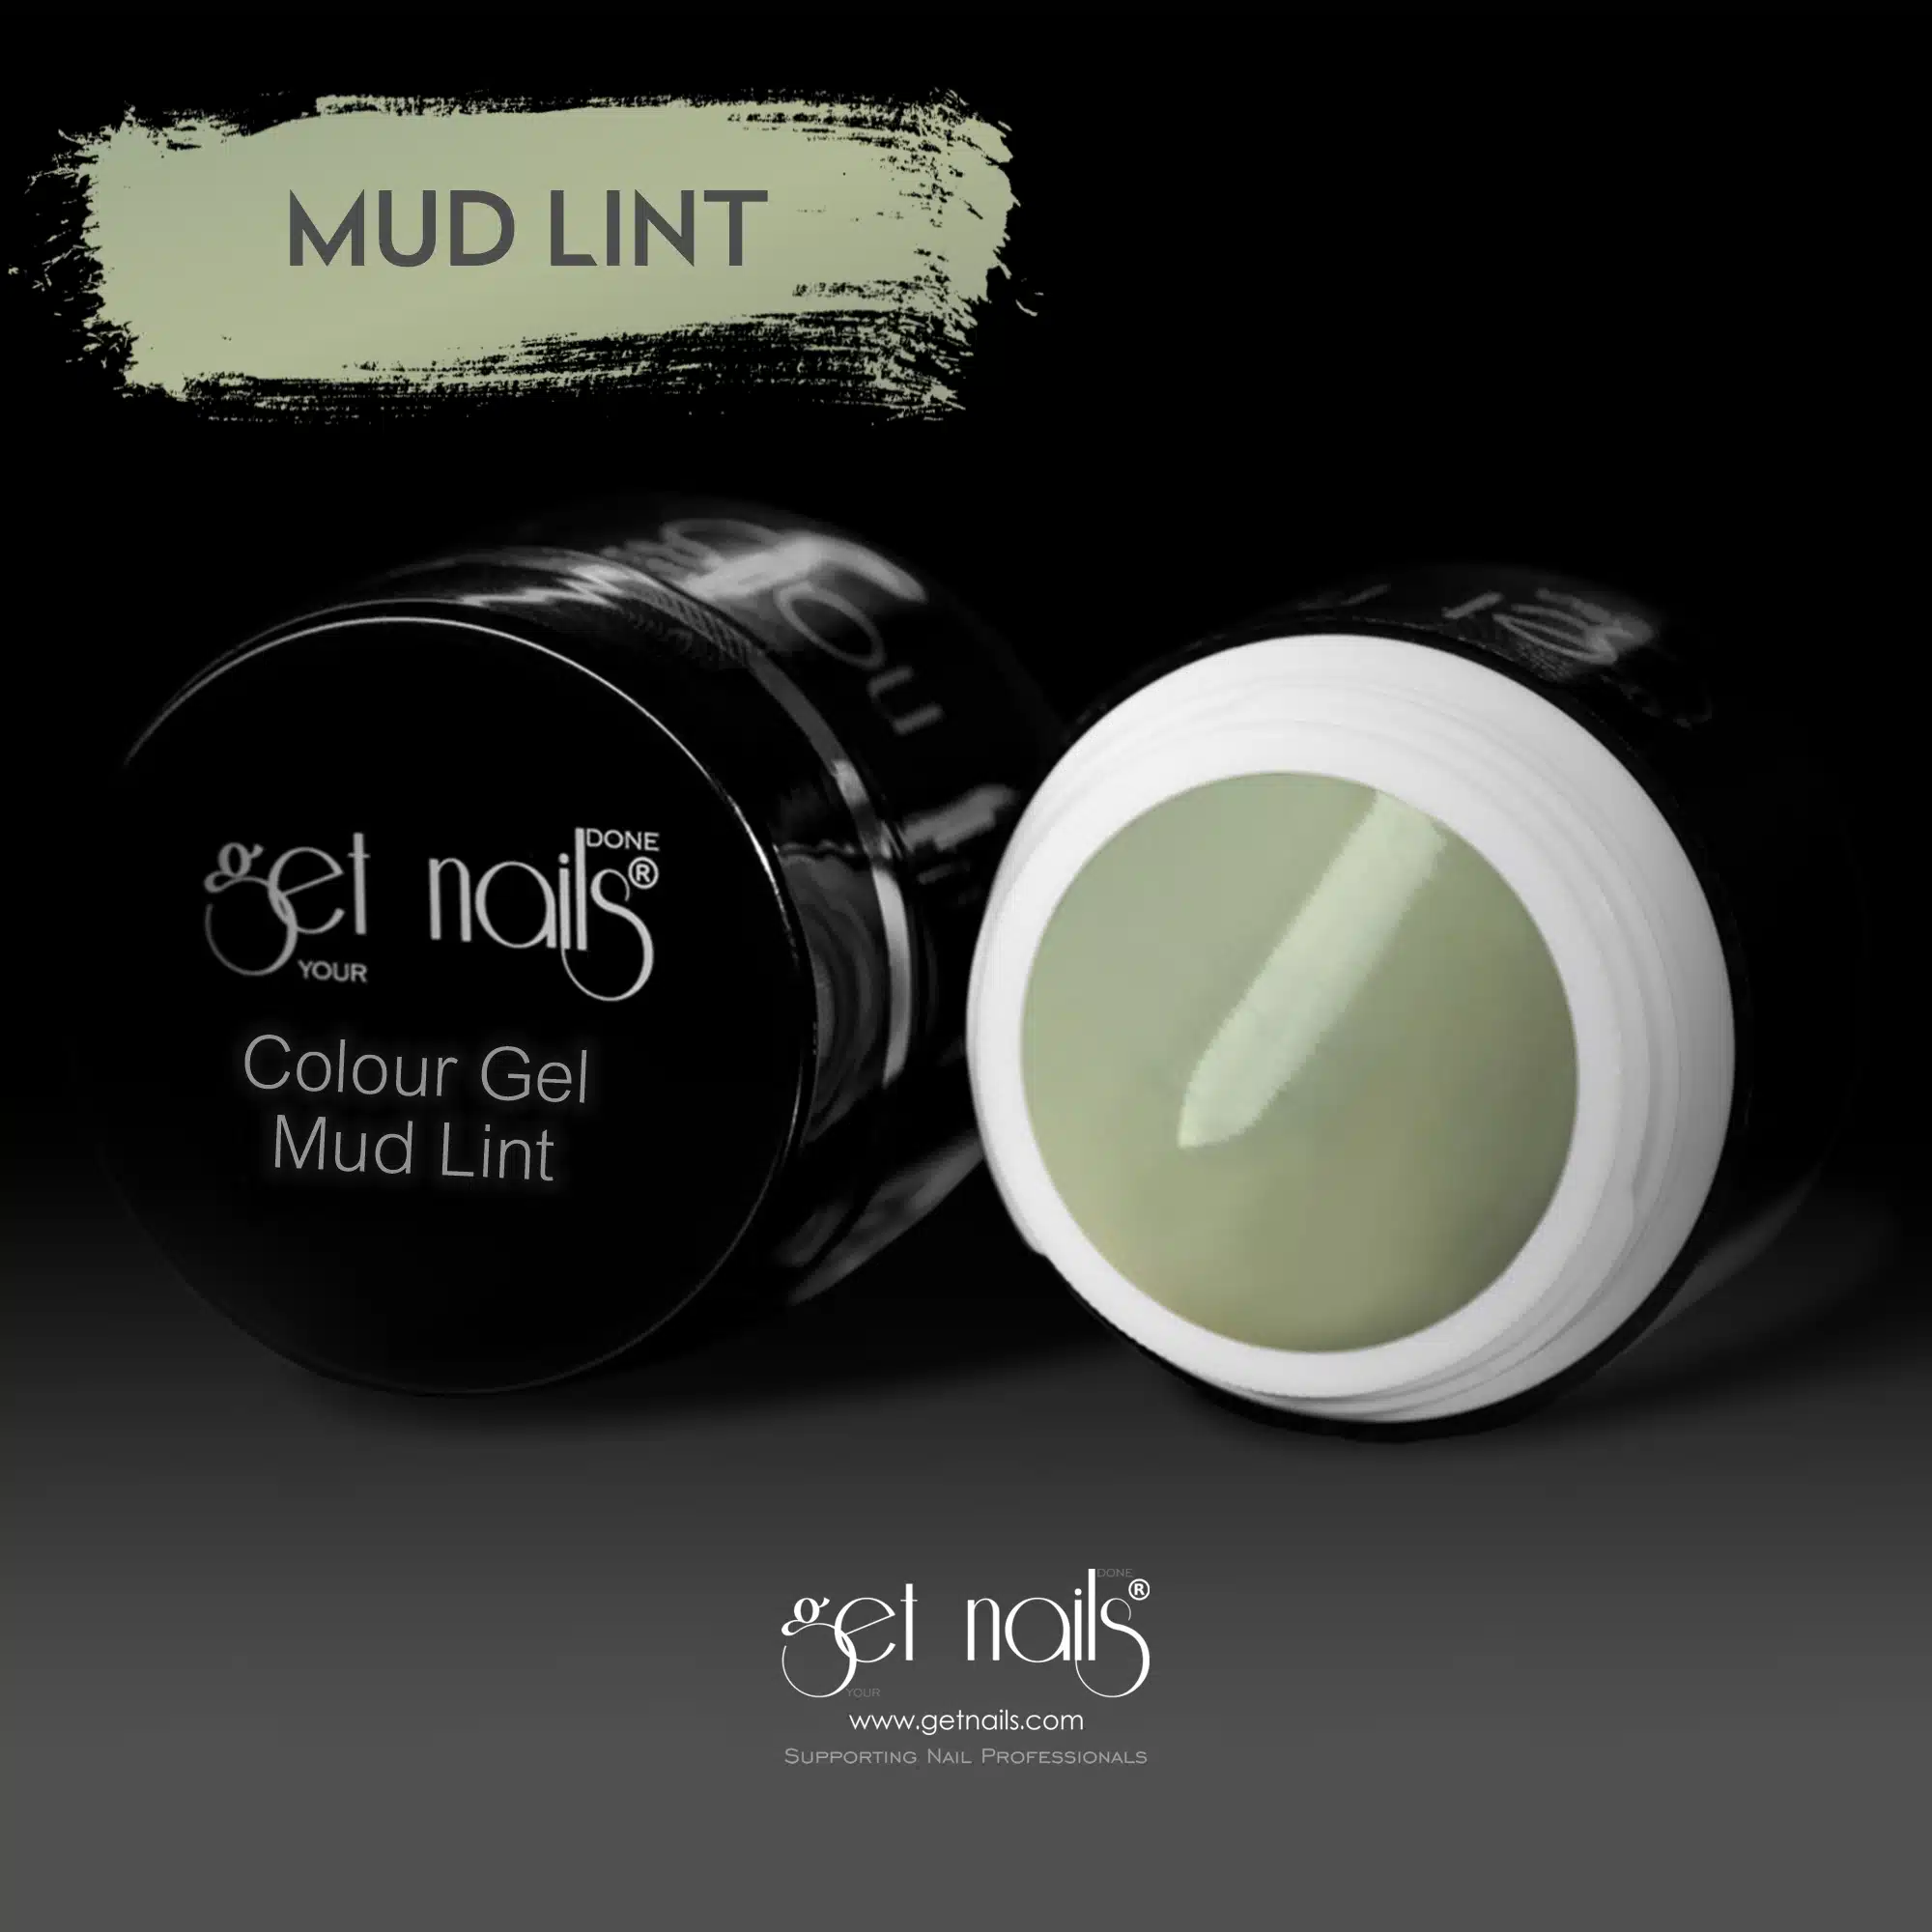 Get Nails Austria - Colour Gel Mud Lint 5g